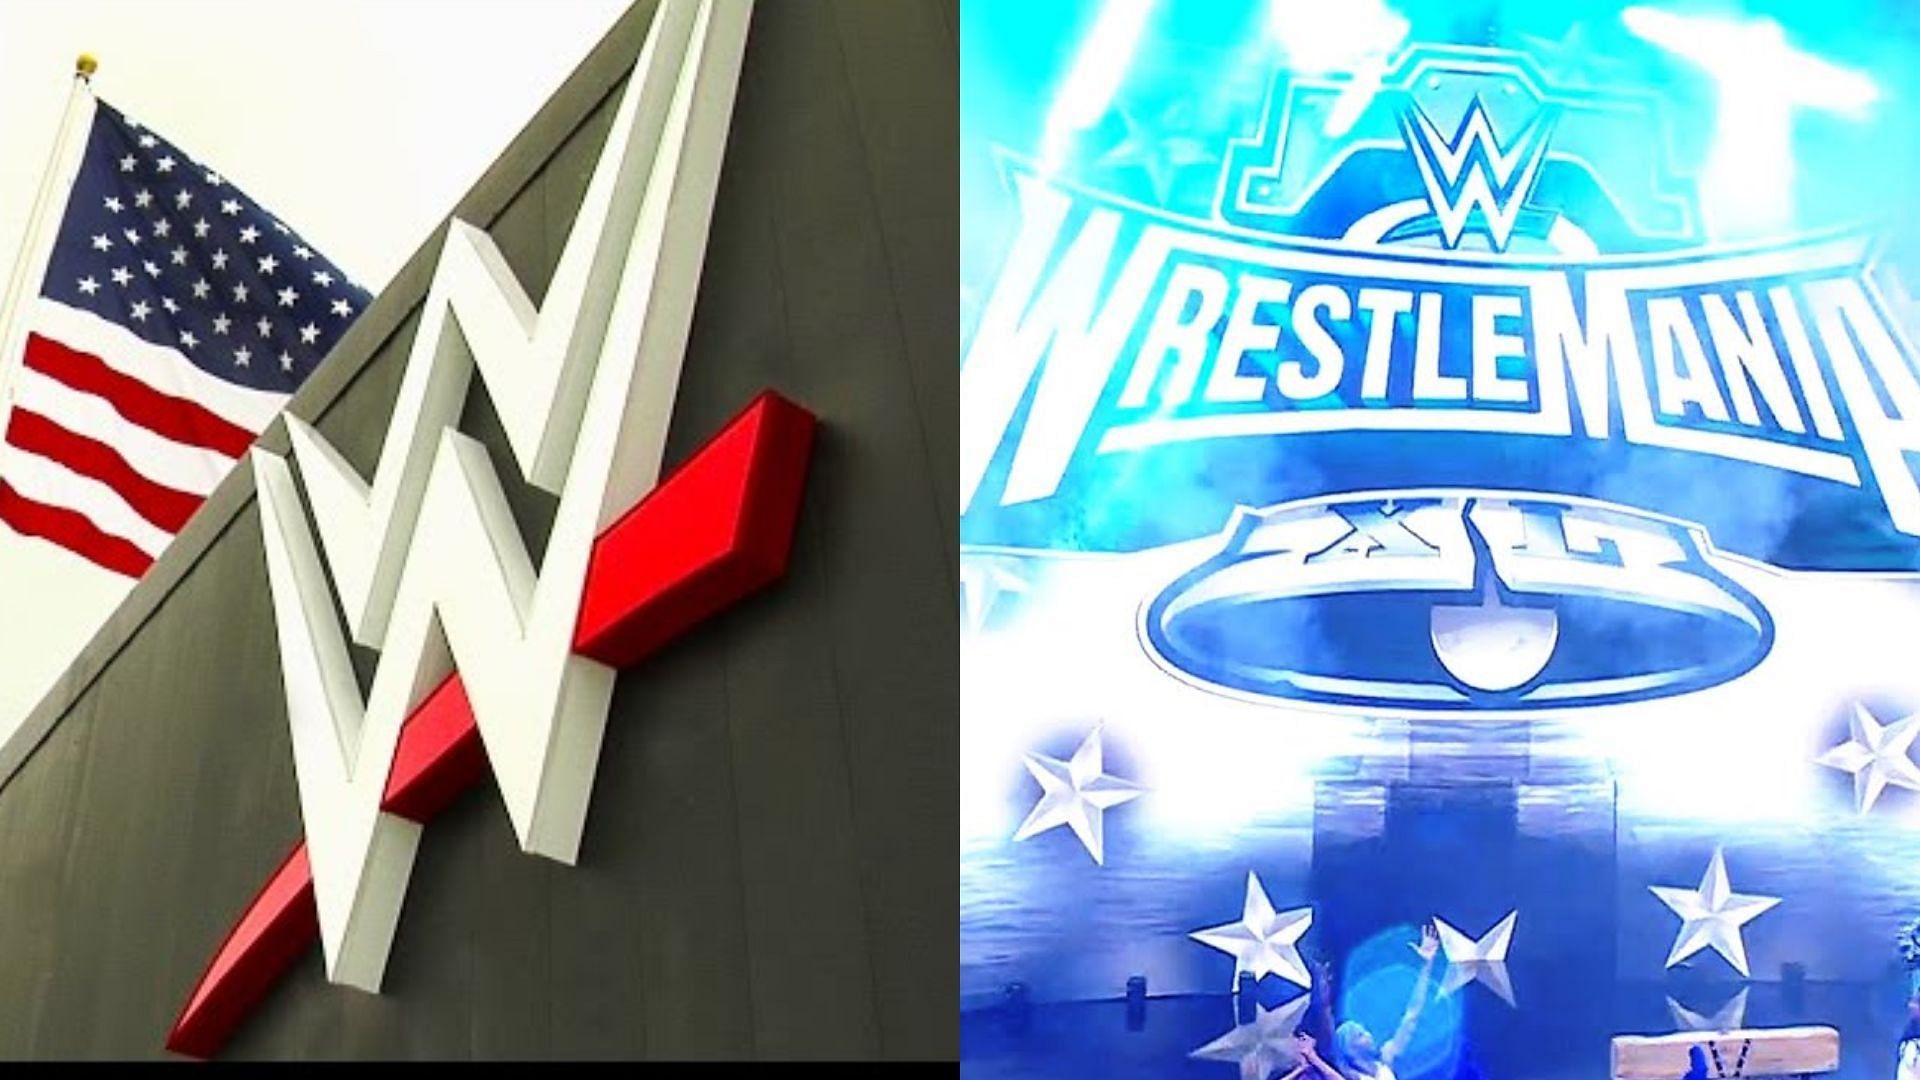 WWE recently held WrestleMania in Philadelphia